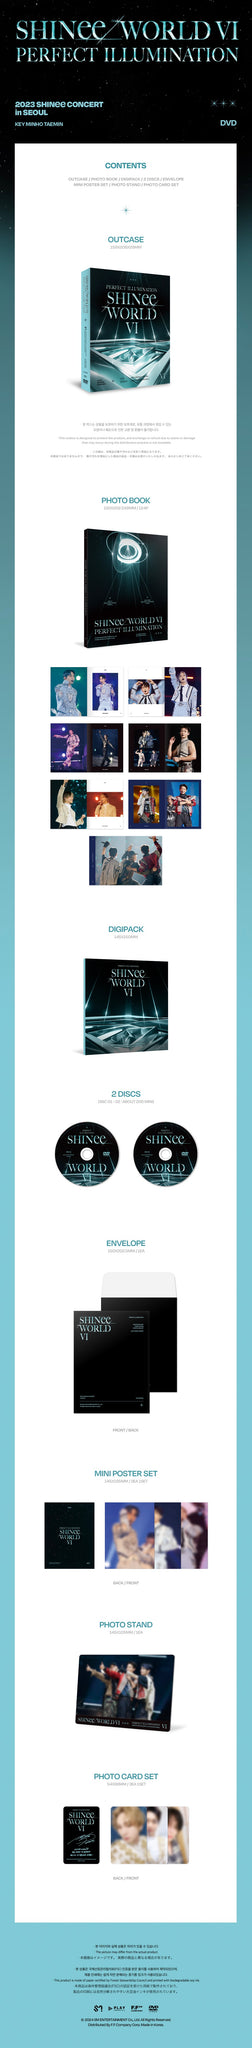 SHINee - SHINee WORLD VI [PERFECT ILLUMINATION] in SEOUL DVD